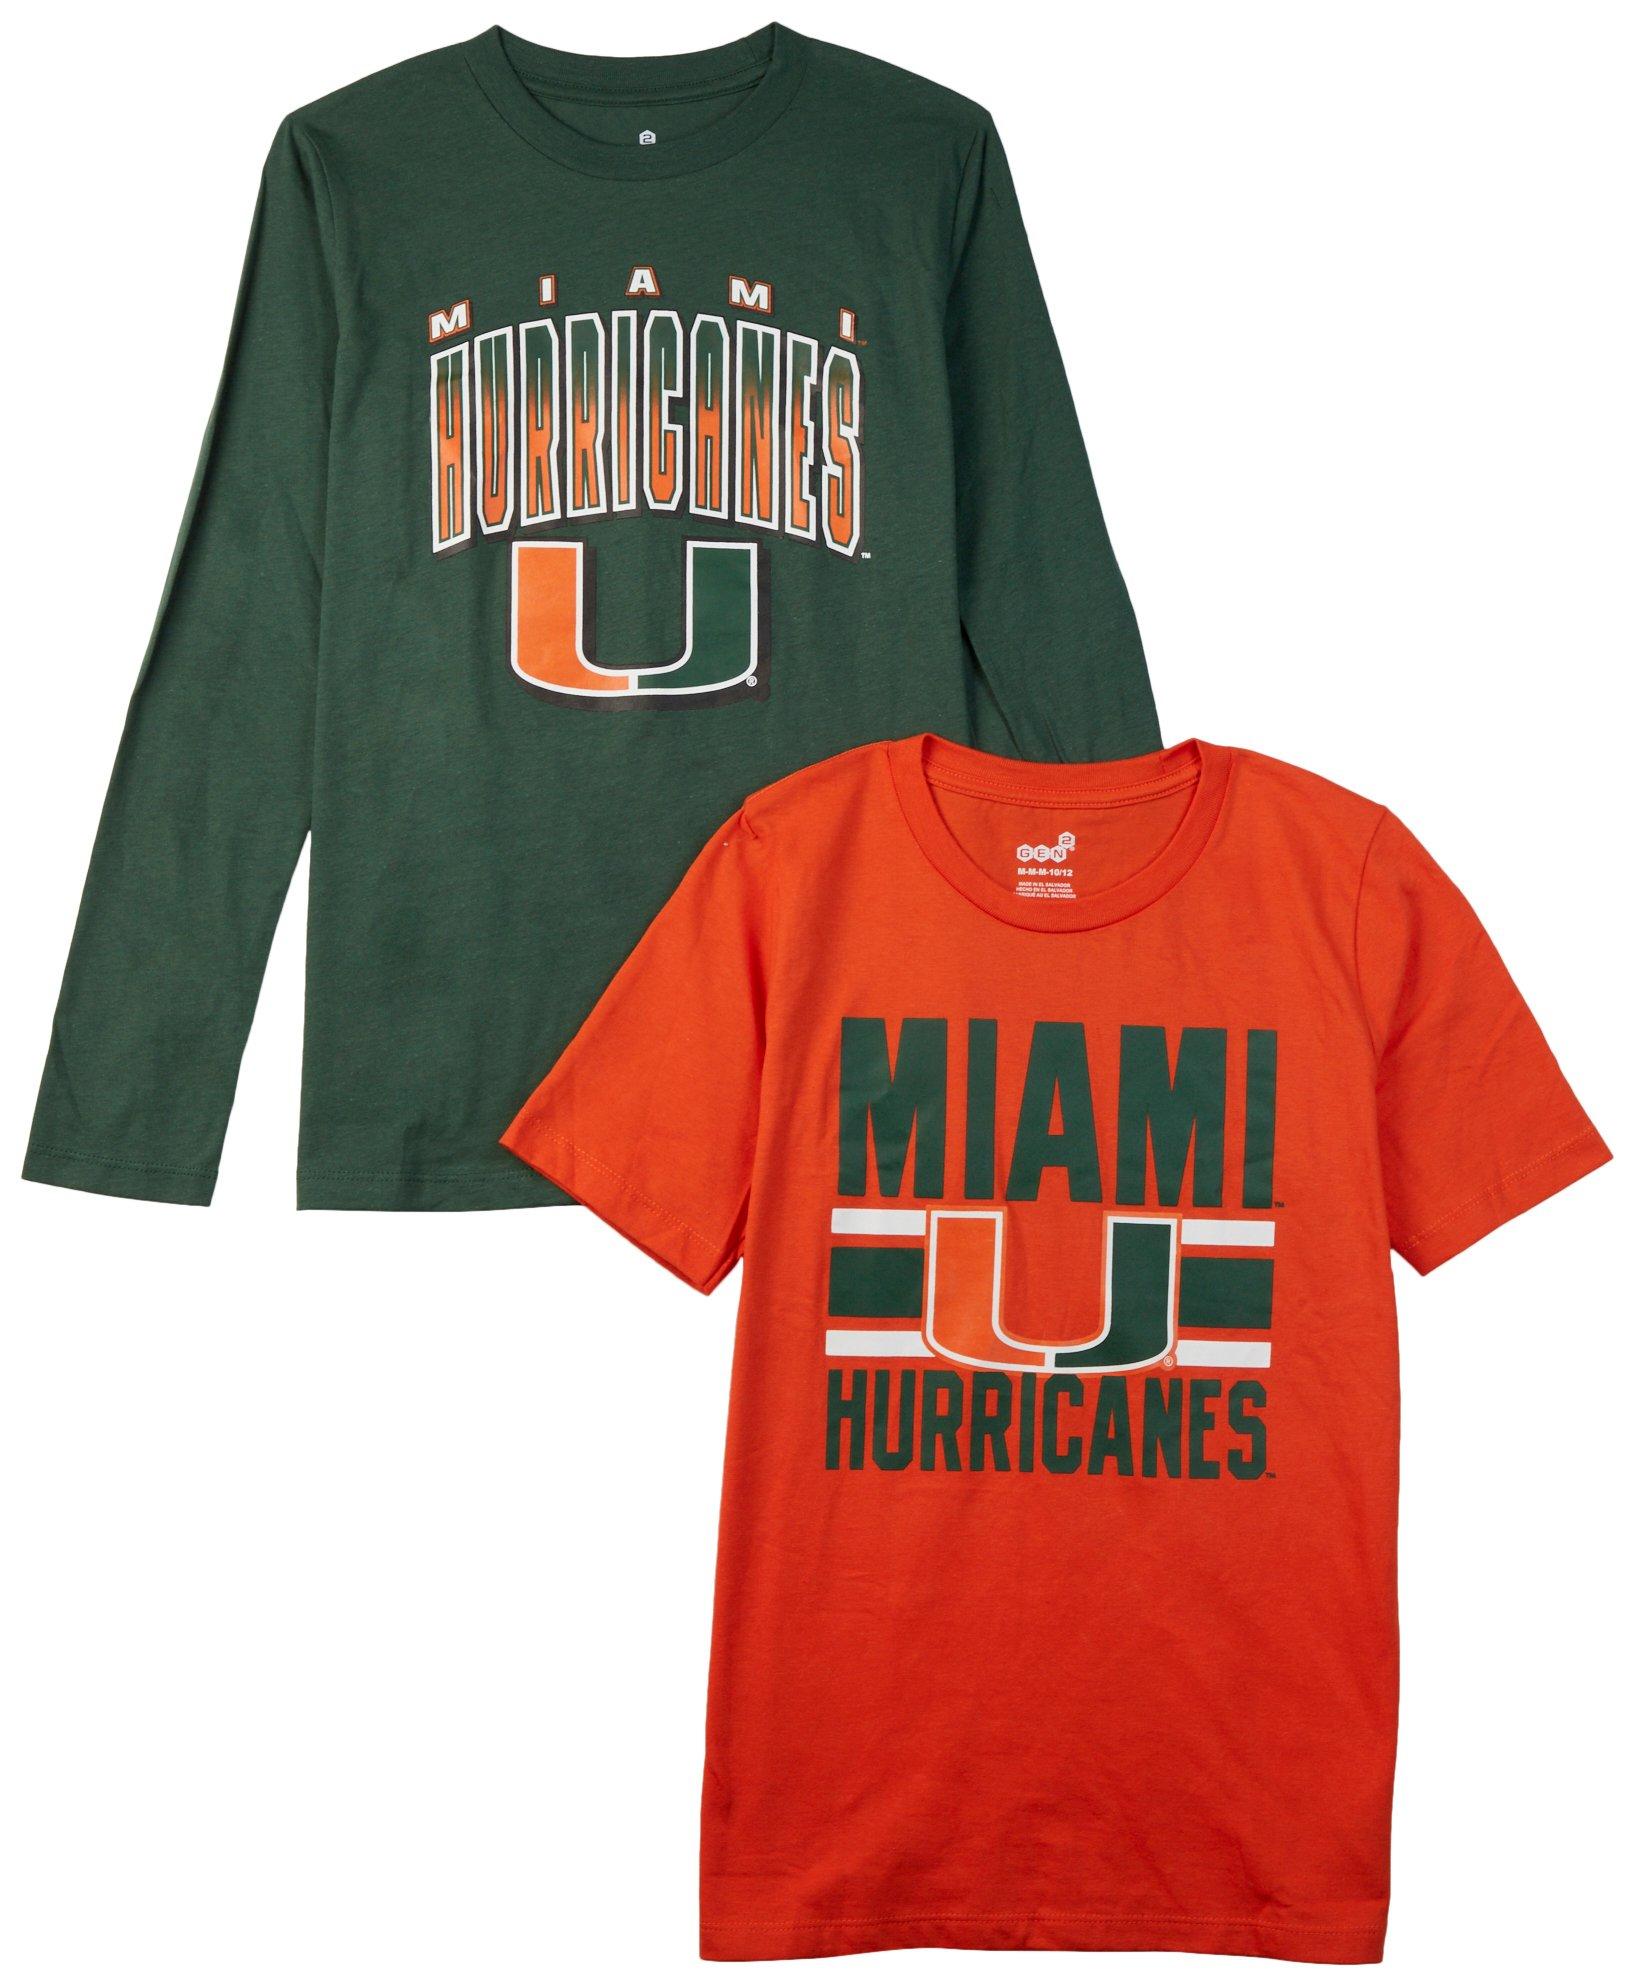 Miami Hurricane Kids 2-piece Long and Short Sleeve Shirt Set